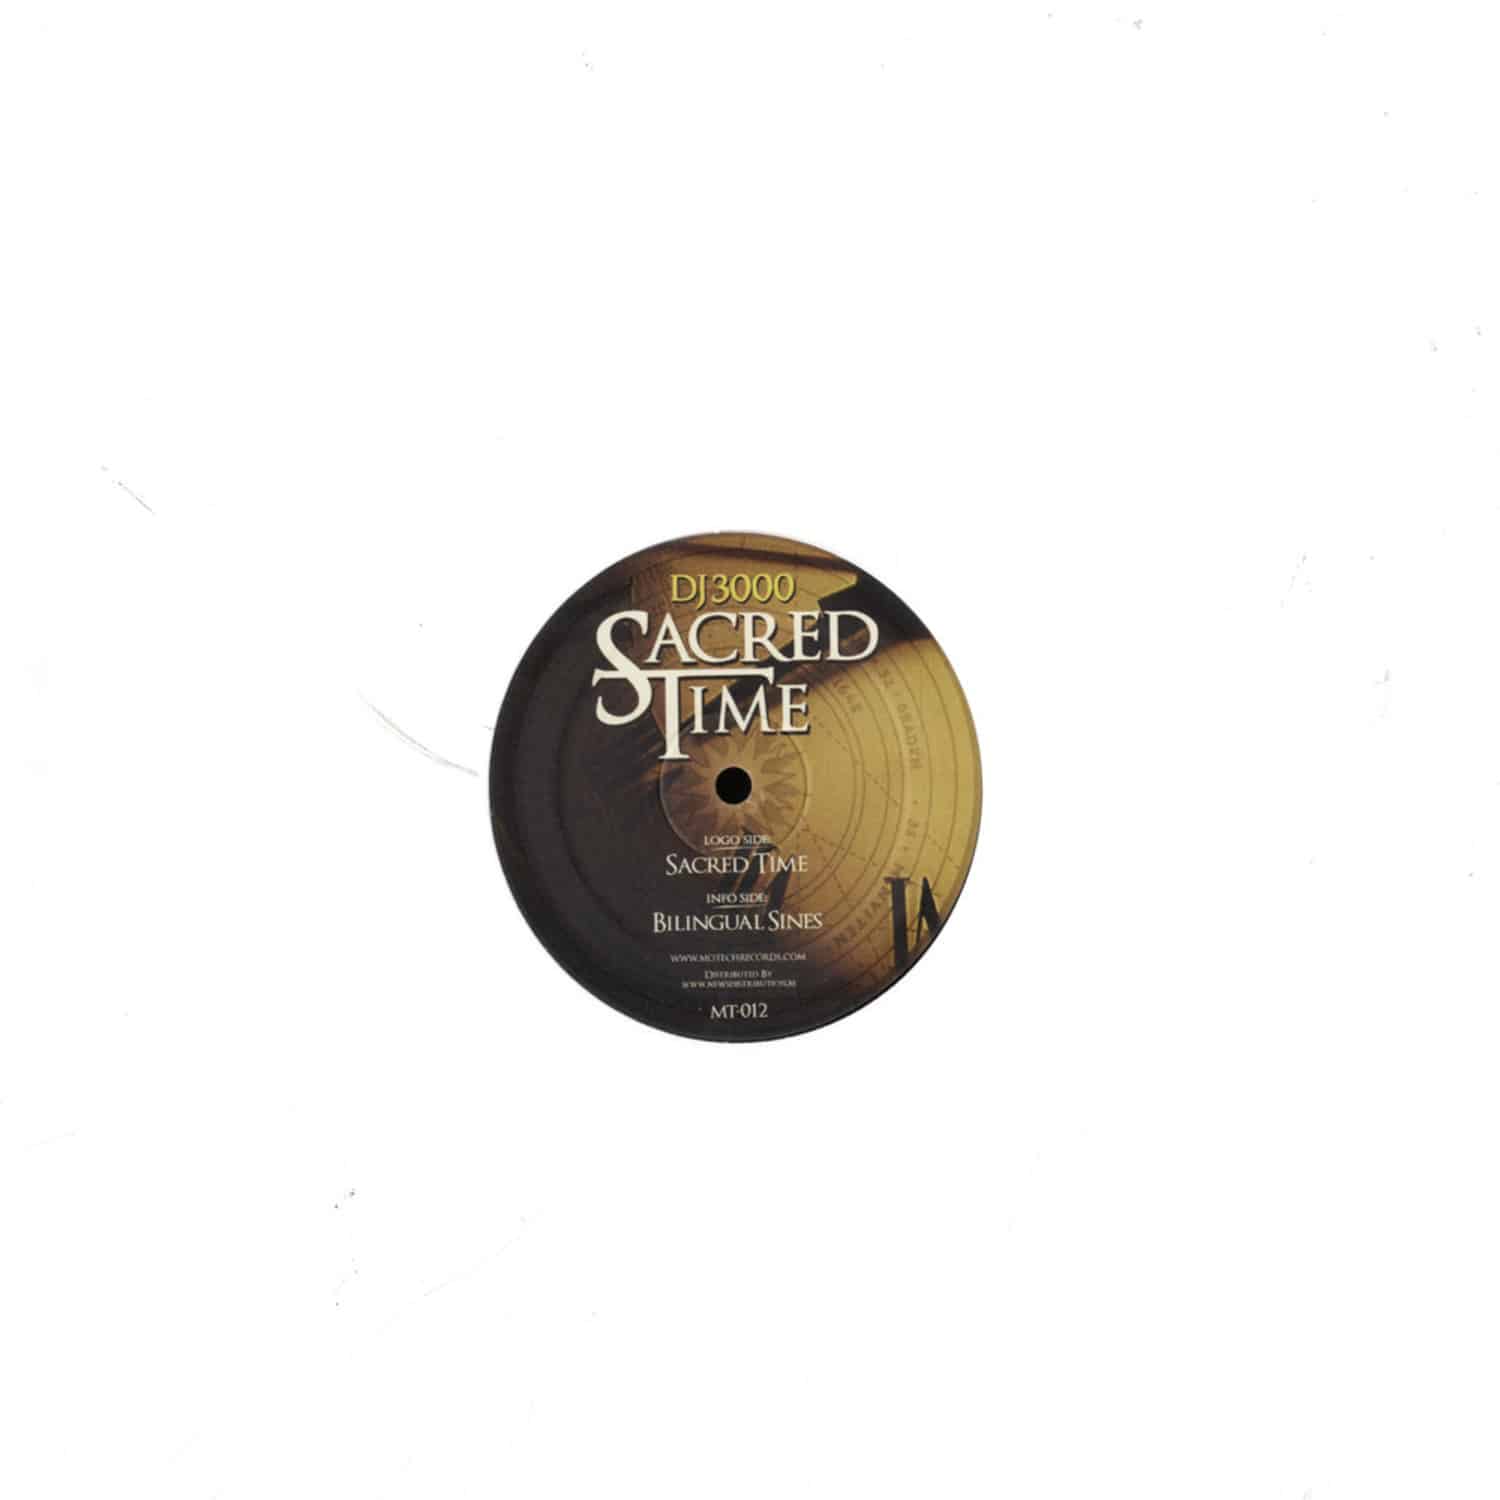 DJ 3000 - SACRED TIMES / BILINGUAL SINES